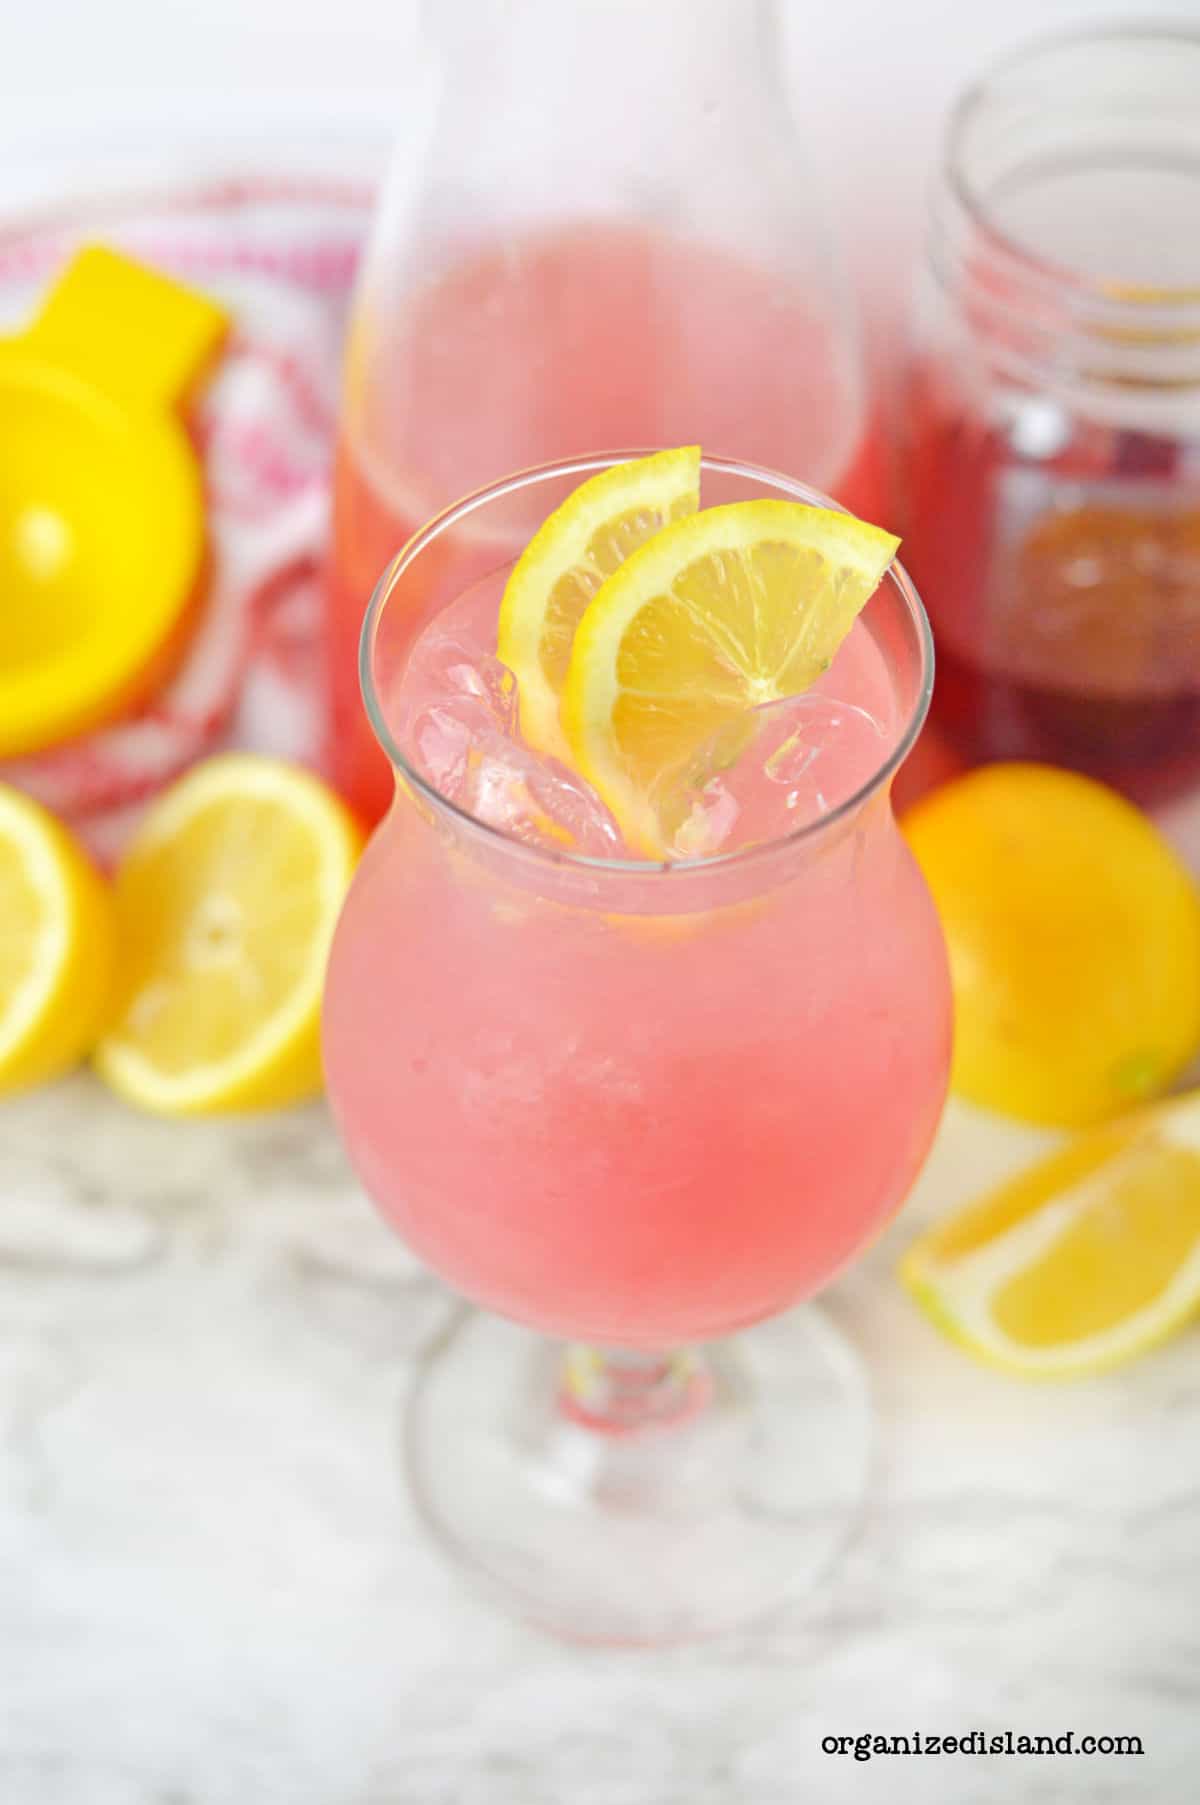 Pink Lemonade Recipe, Homemade Lemonade Recipe